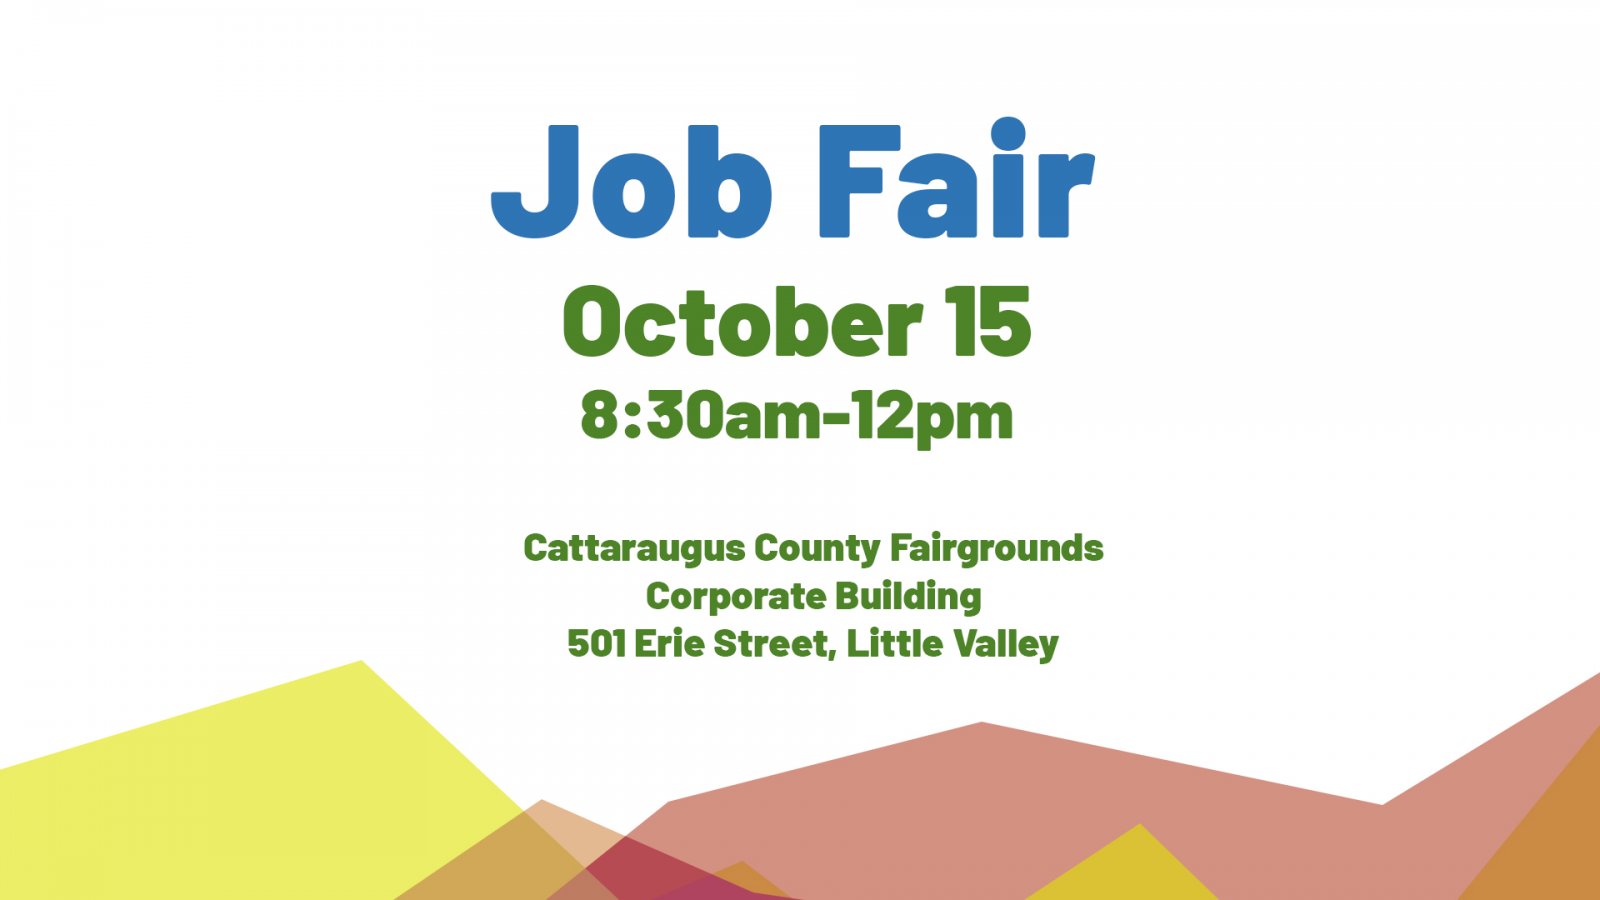 Job Fair - October 15 - 8:30am-12pm - Cattaraugus County Fairgrounds - Corporate Building Little Valley